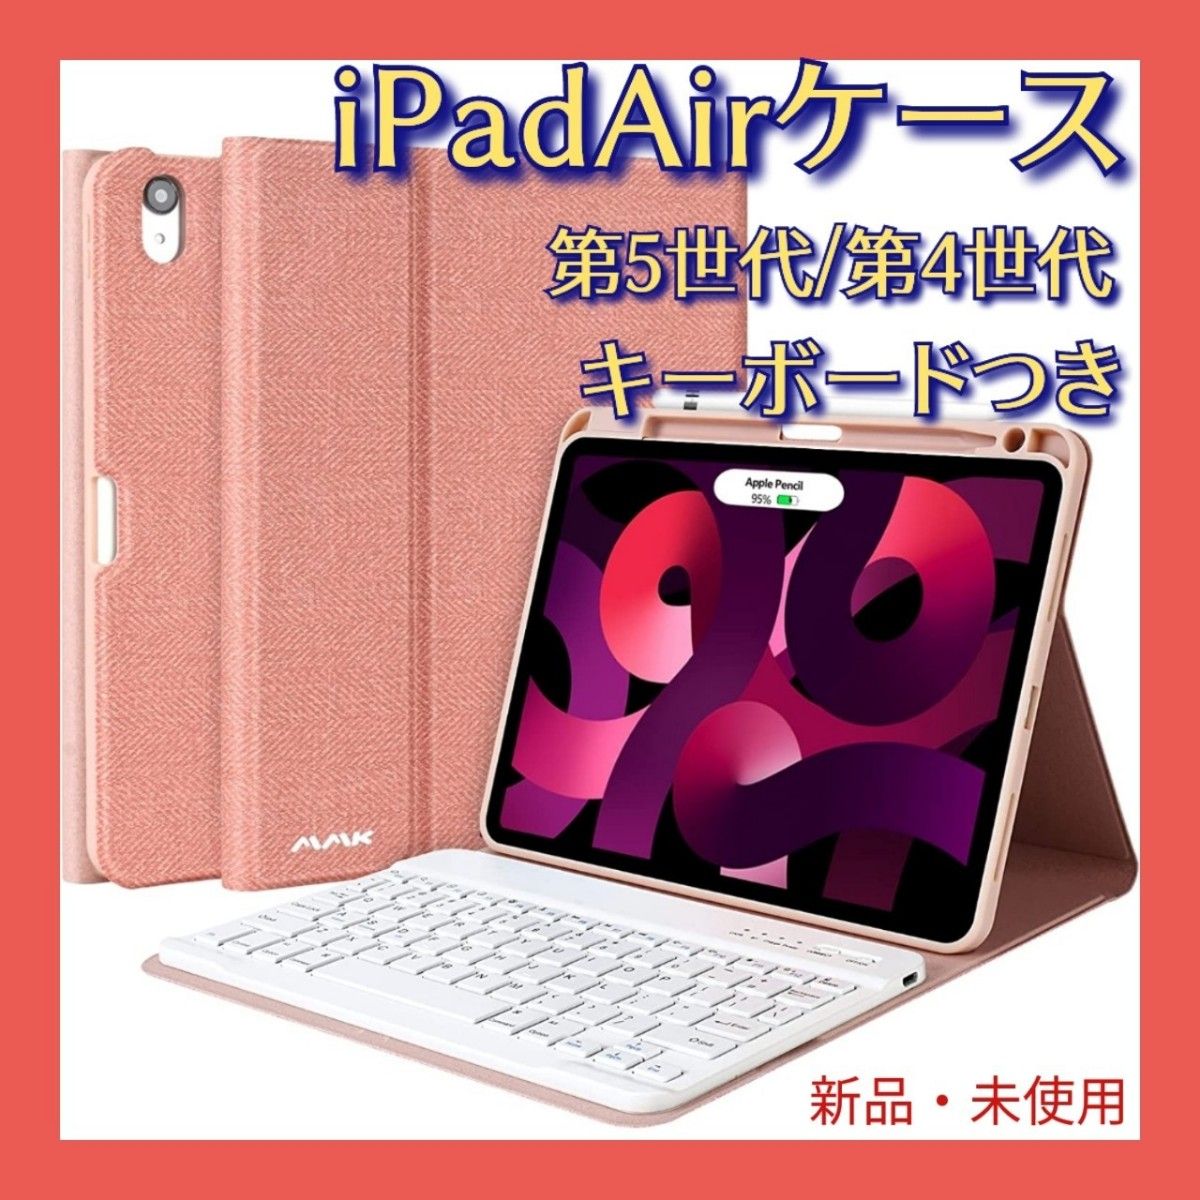 Apple iPad AIR 2 32GB スペースグレー保護ケース、キーボード - 通販